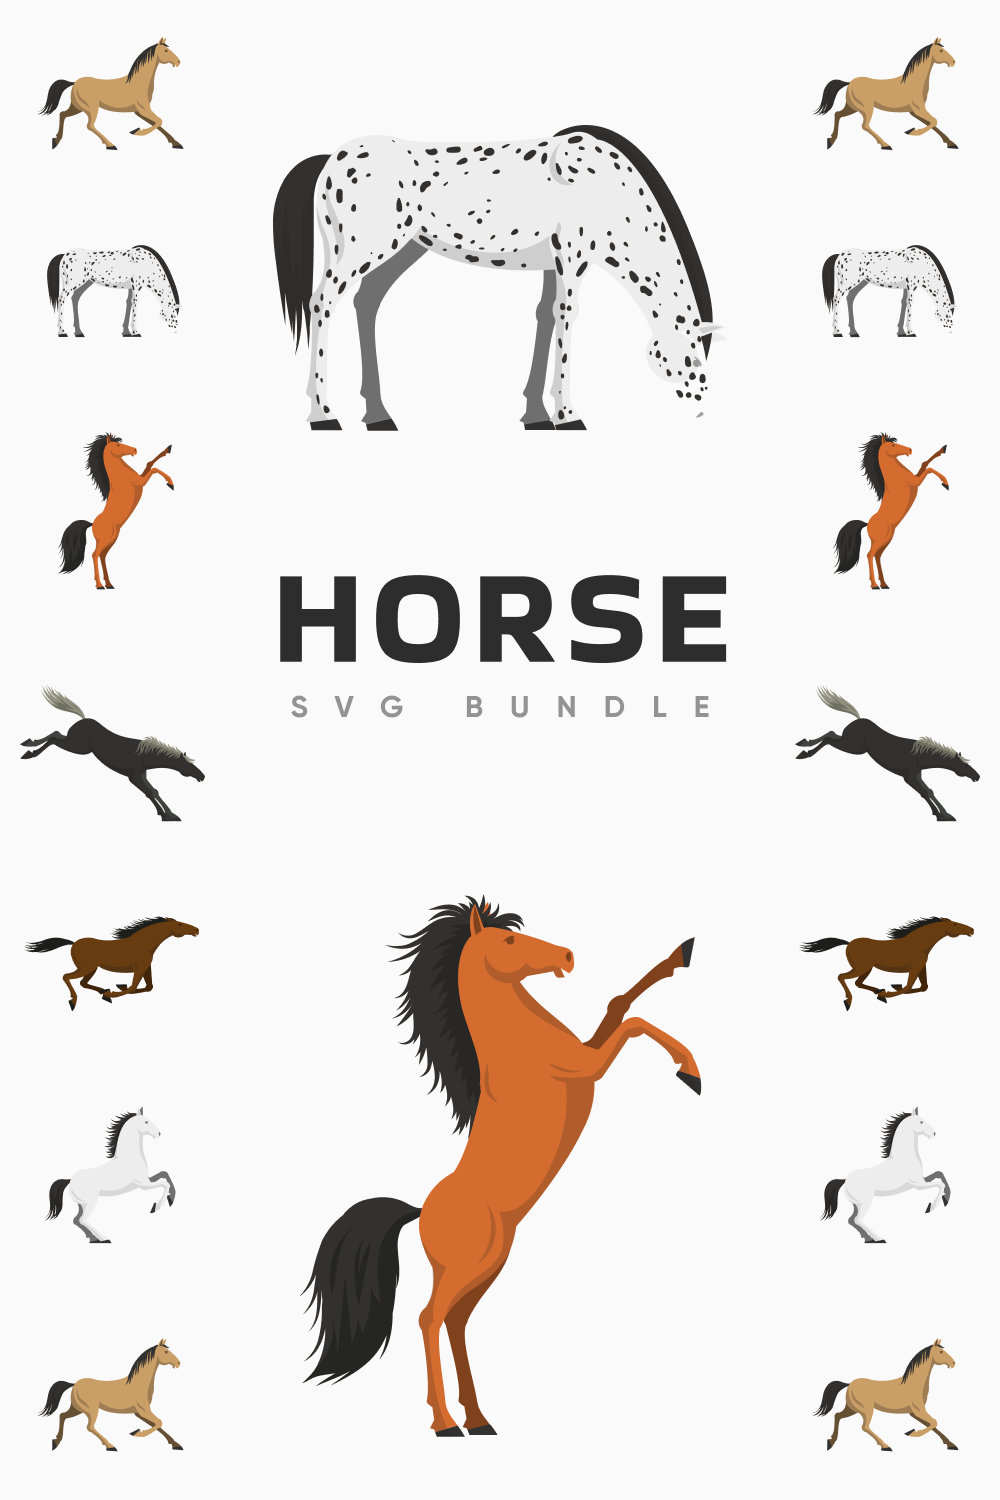 Horse SVG Bundle.